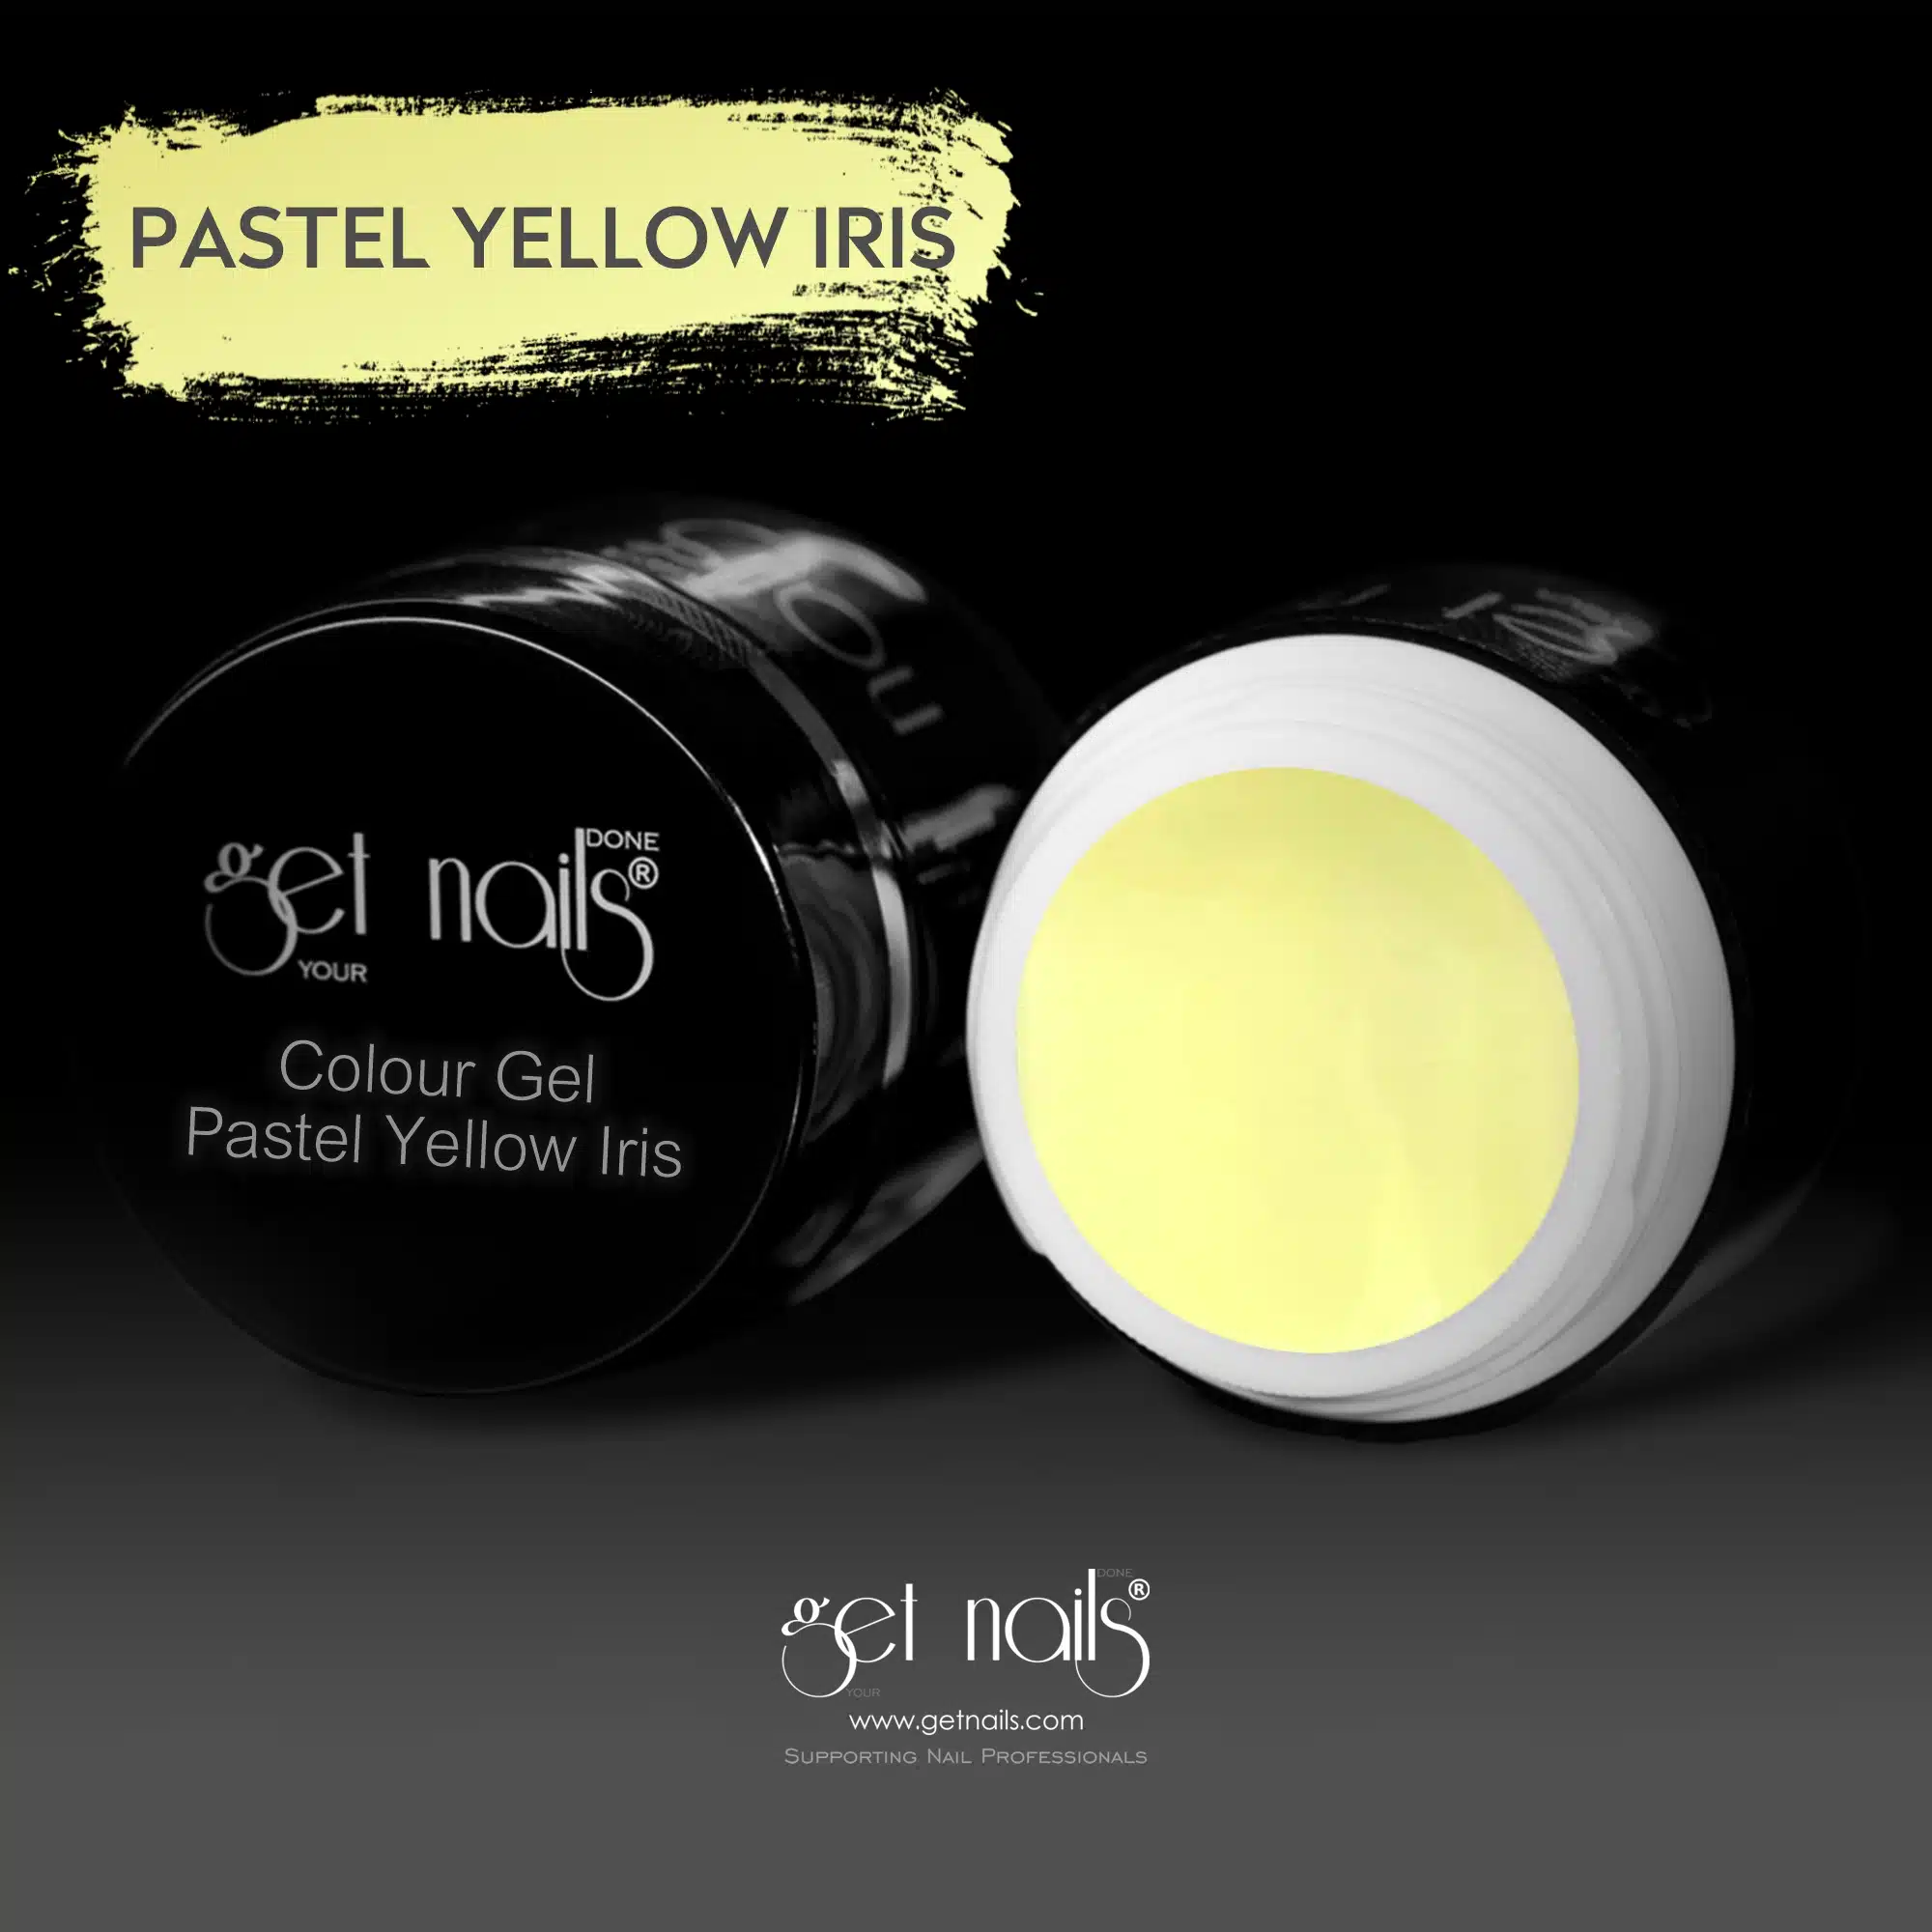 Get Nails Austria - Colour Gel Pastel Yellow Iris 5g